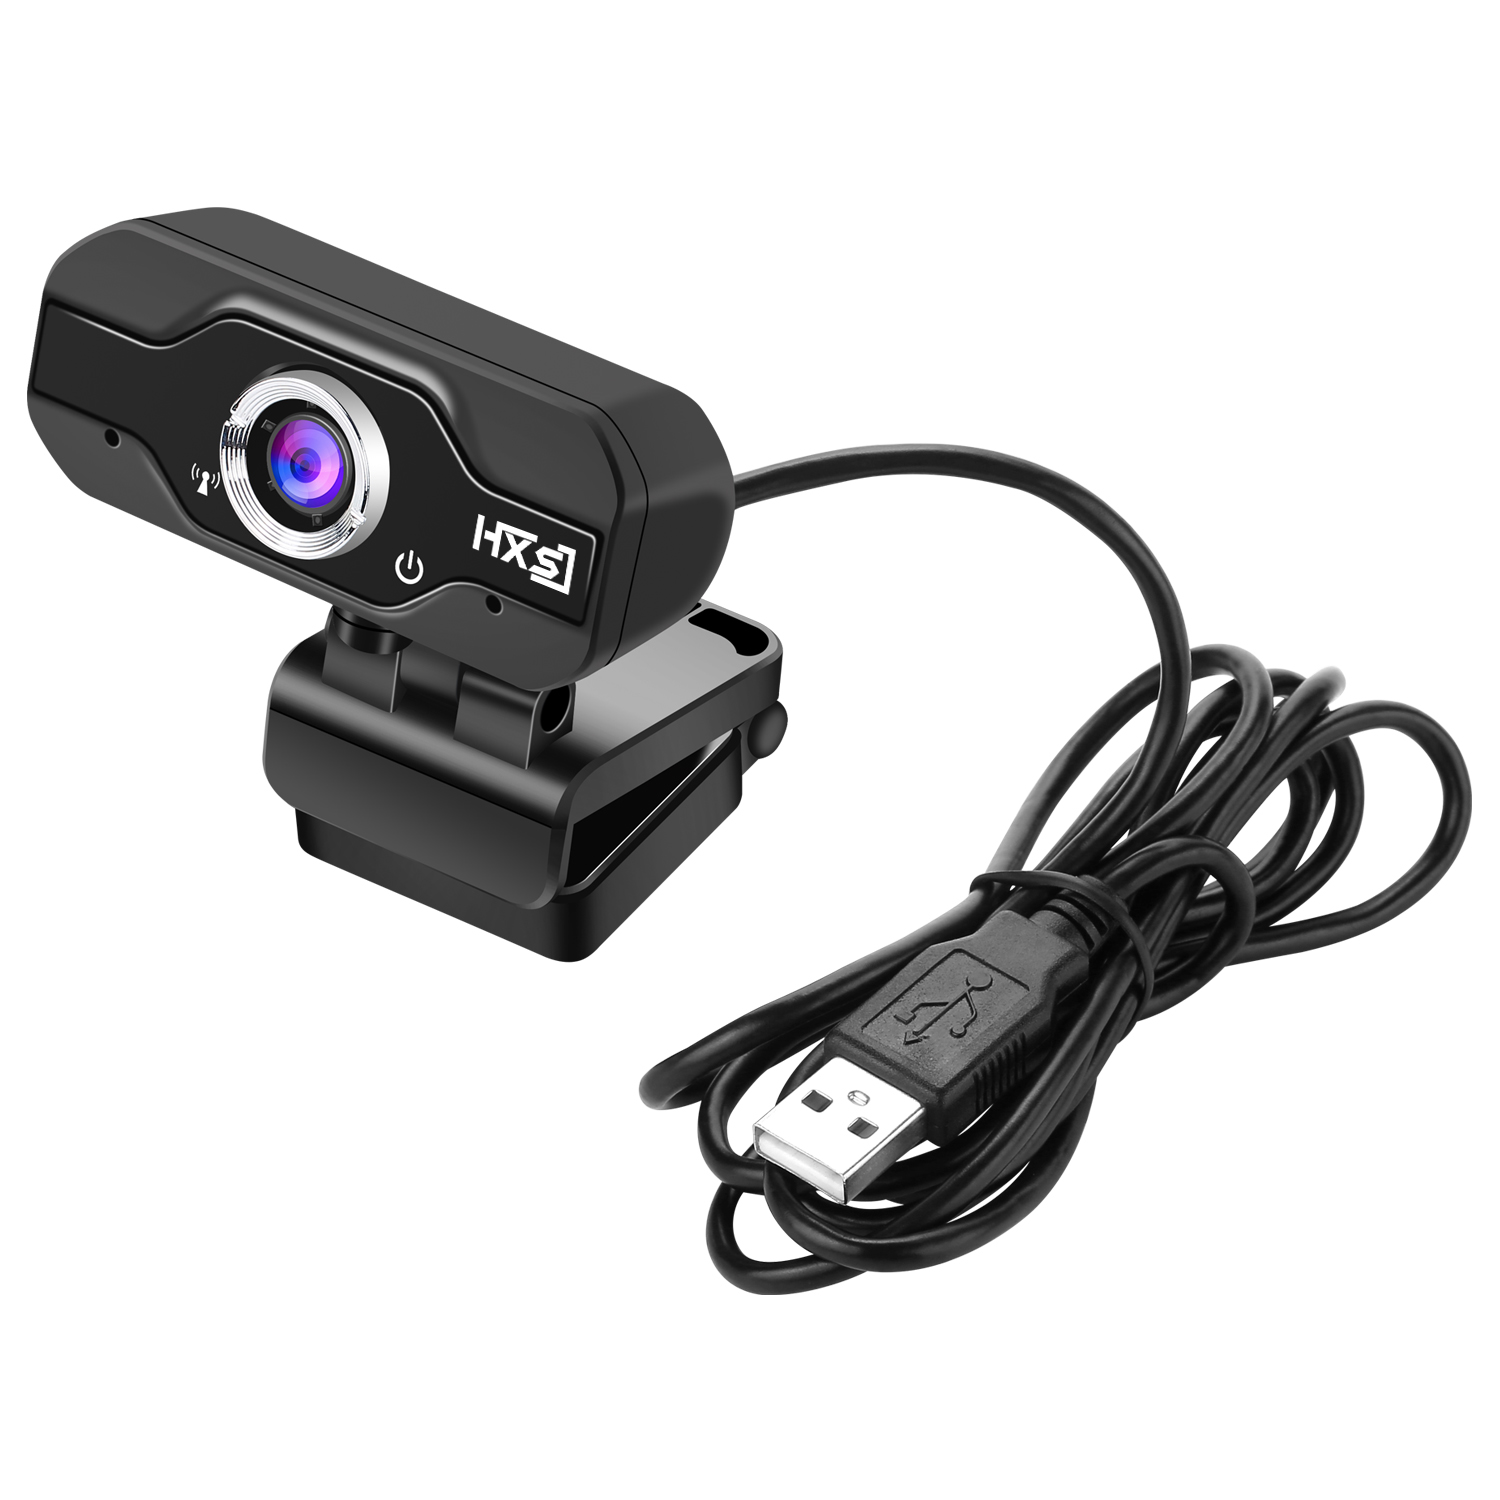 HXSJ HD 720P CMOS Sensor Webcam Built-in Microphone Adjustable Angle for Laptop Desktop 13